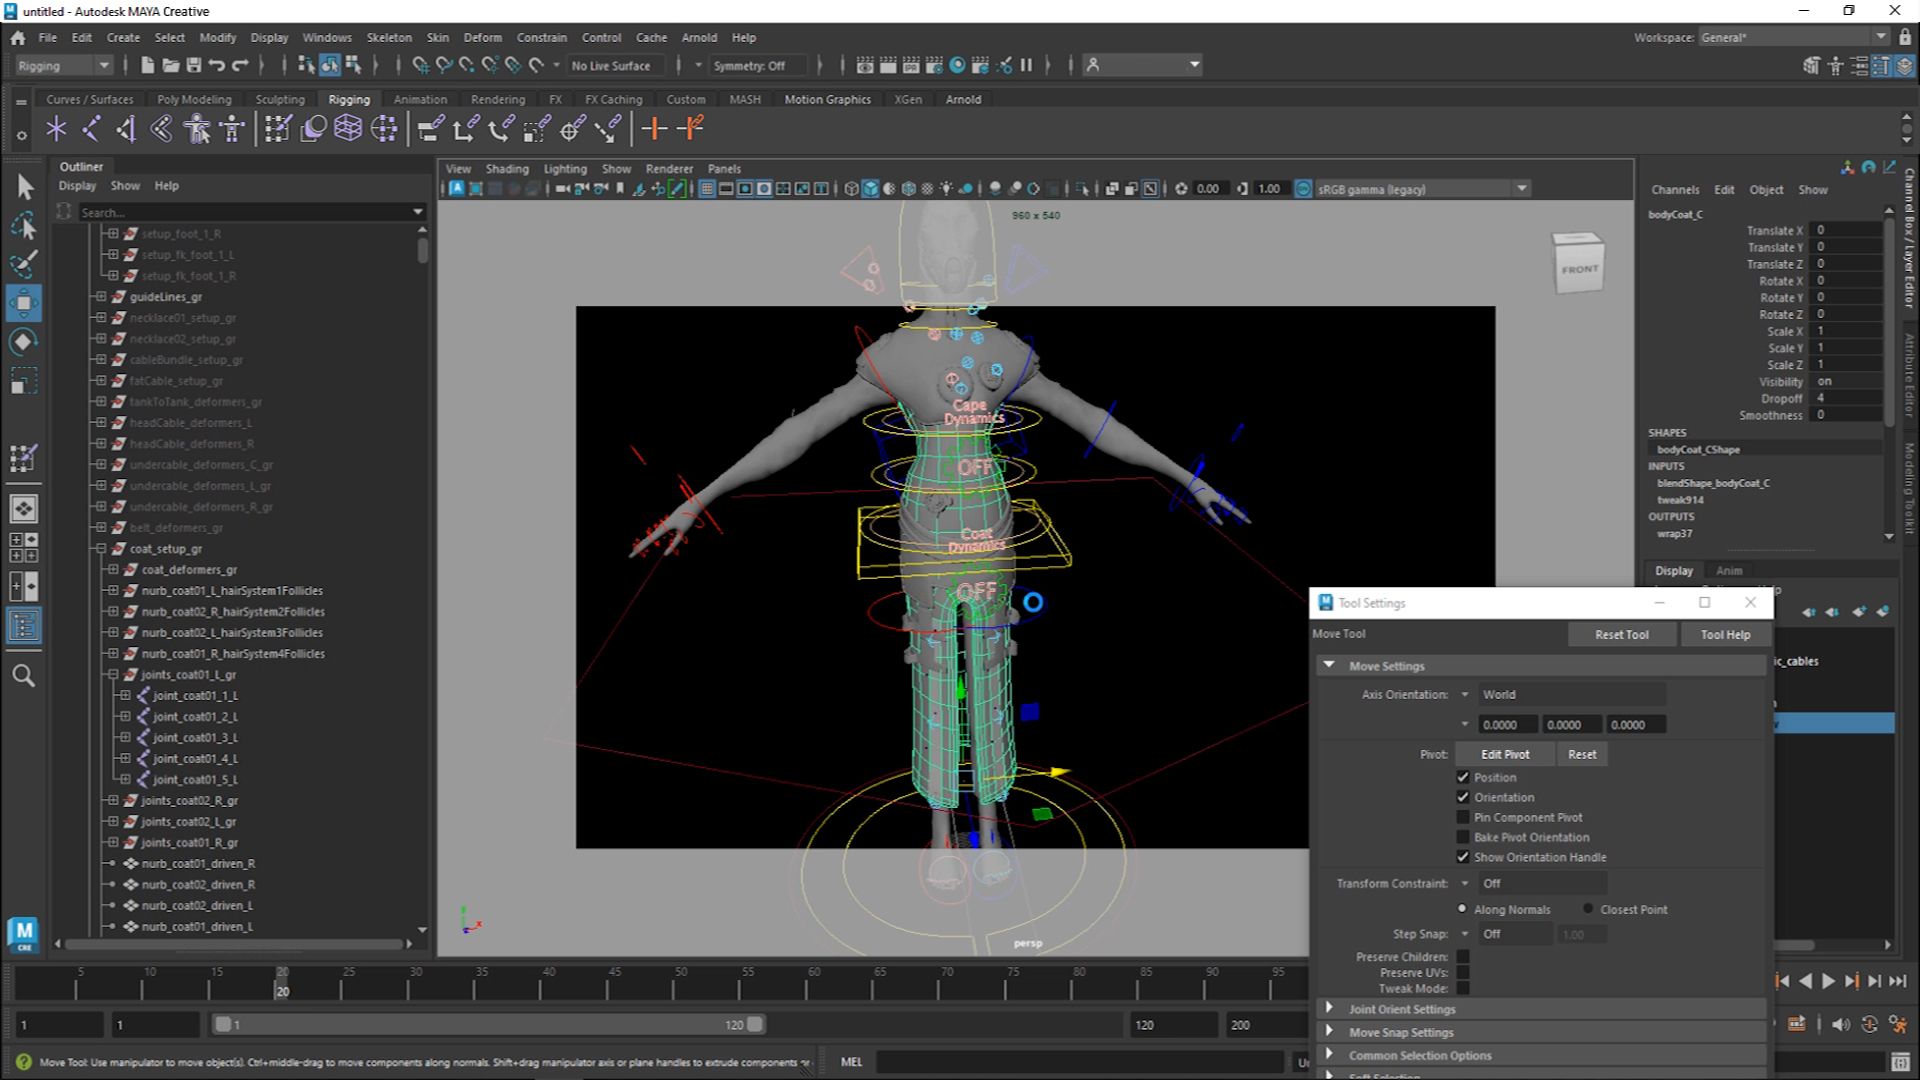 Autodesk launches Maya Creative - Architosh